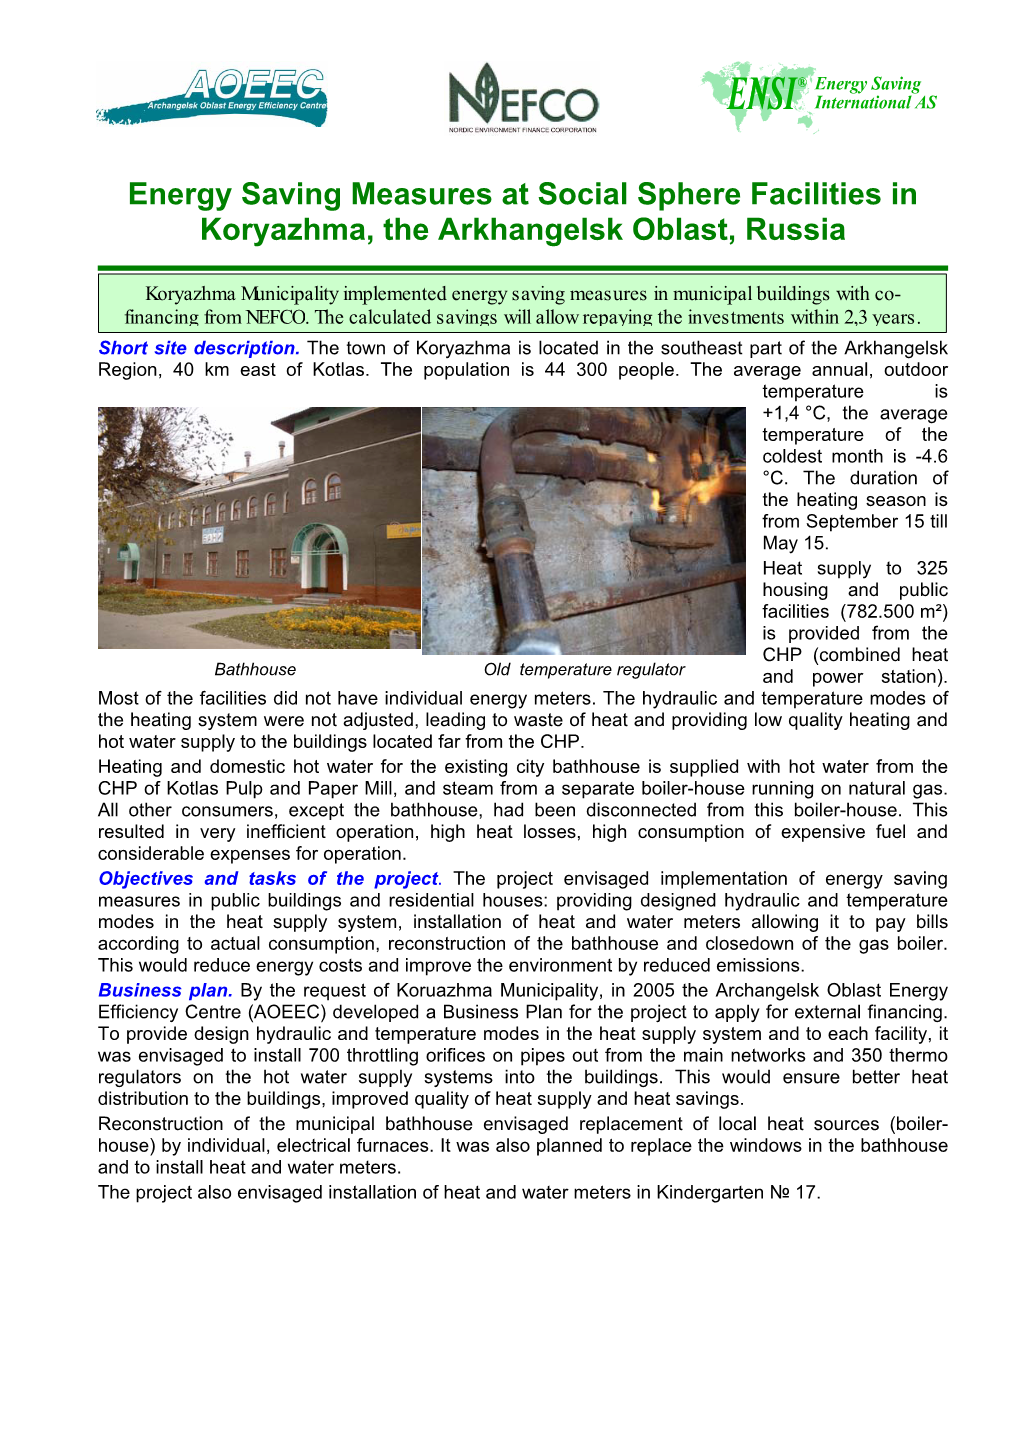 Energy Saving Measures at Social Sphere Facilities in Koryazhma, the Arkhangelsk Oblast, Russia